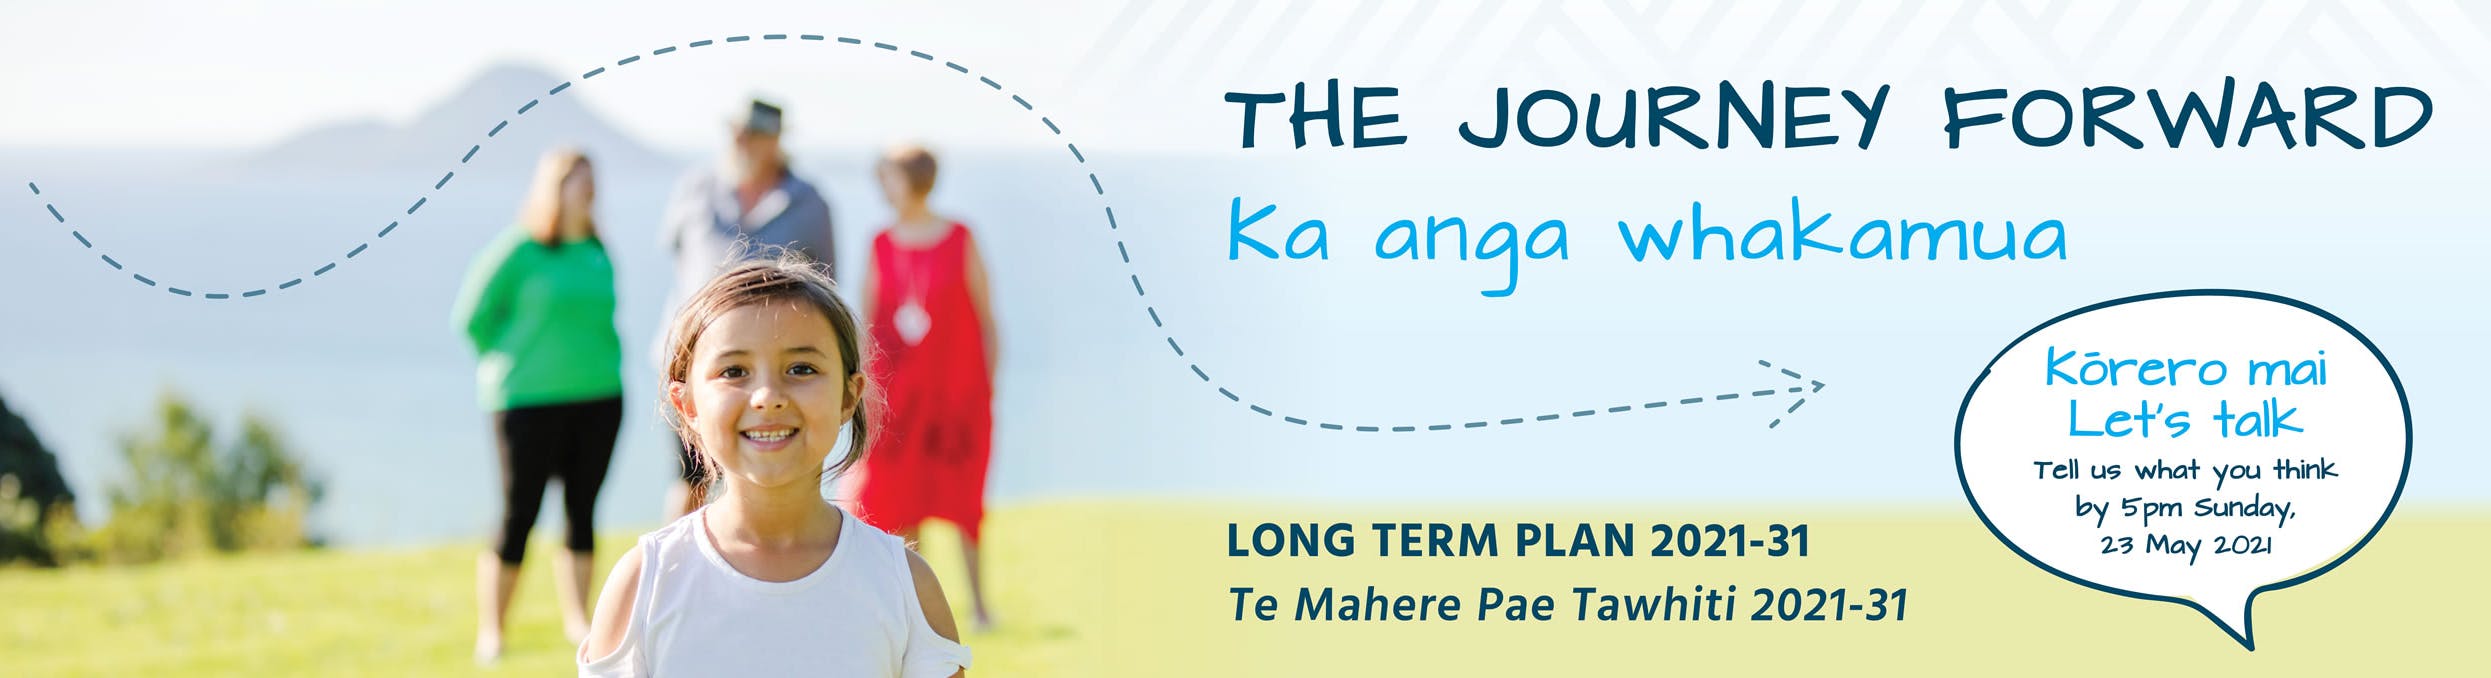 Long Term Plan - Te Mahere Pae Tawhiti 2021-31